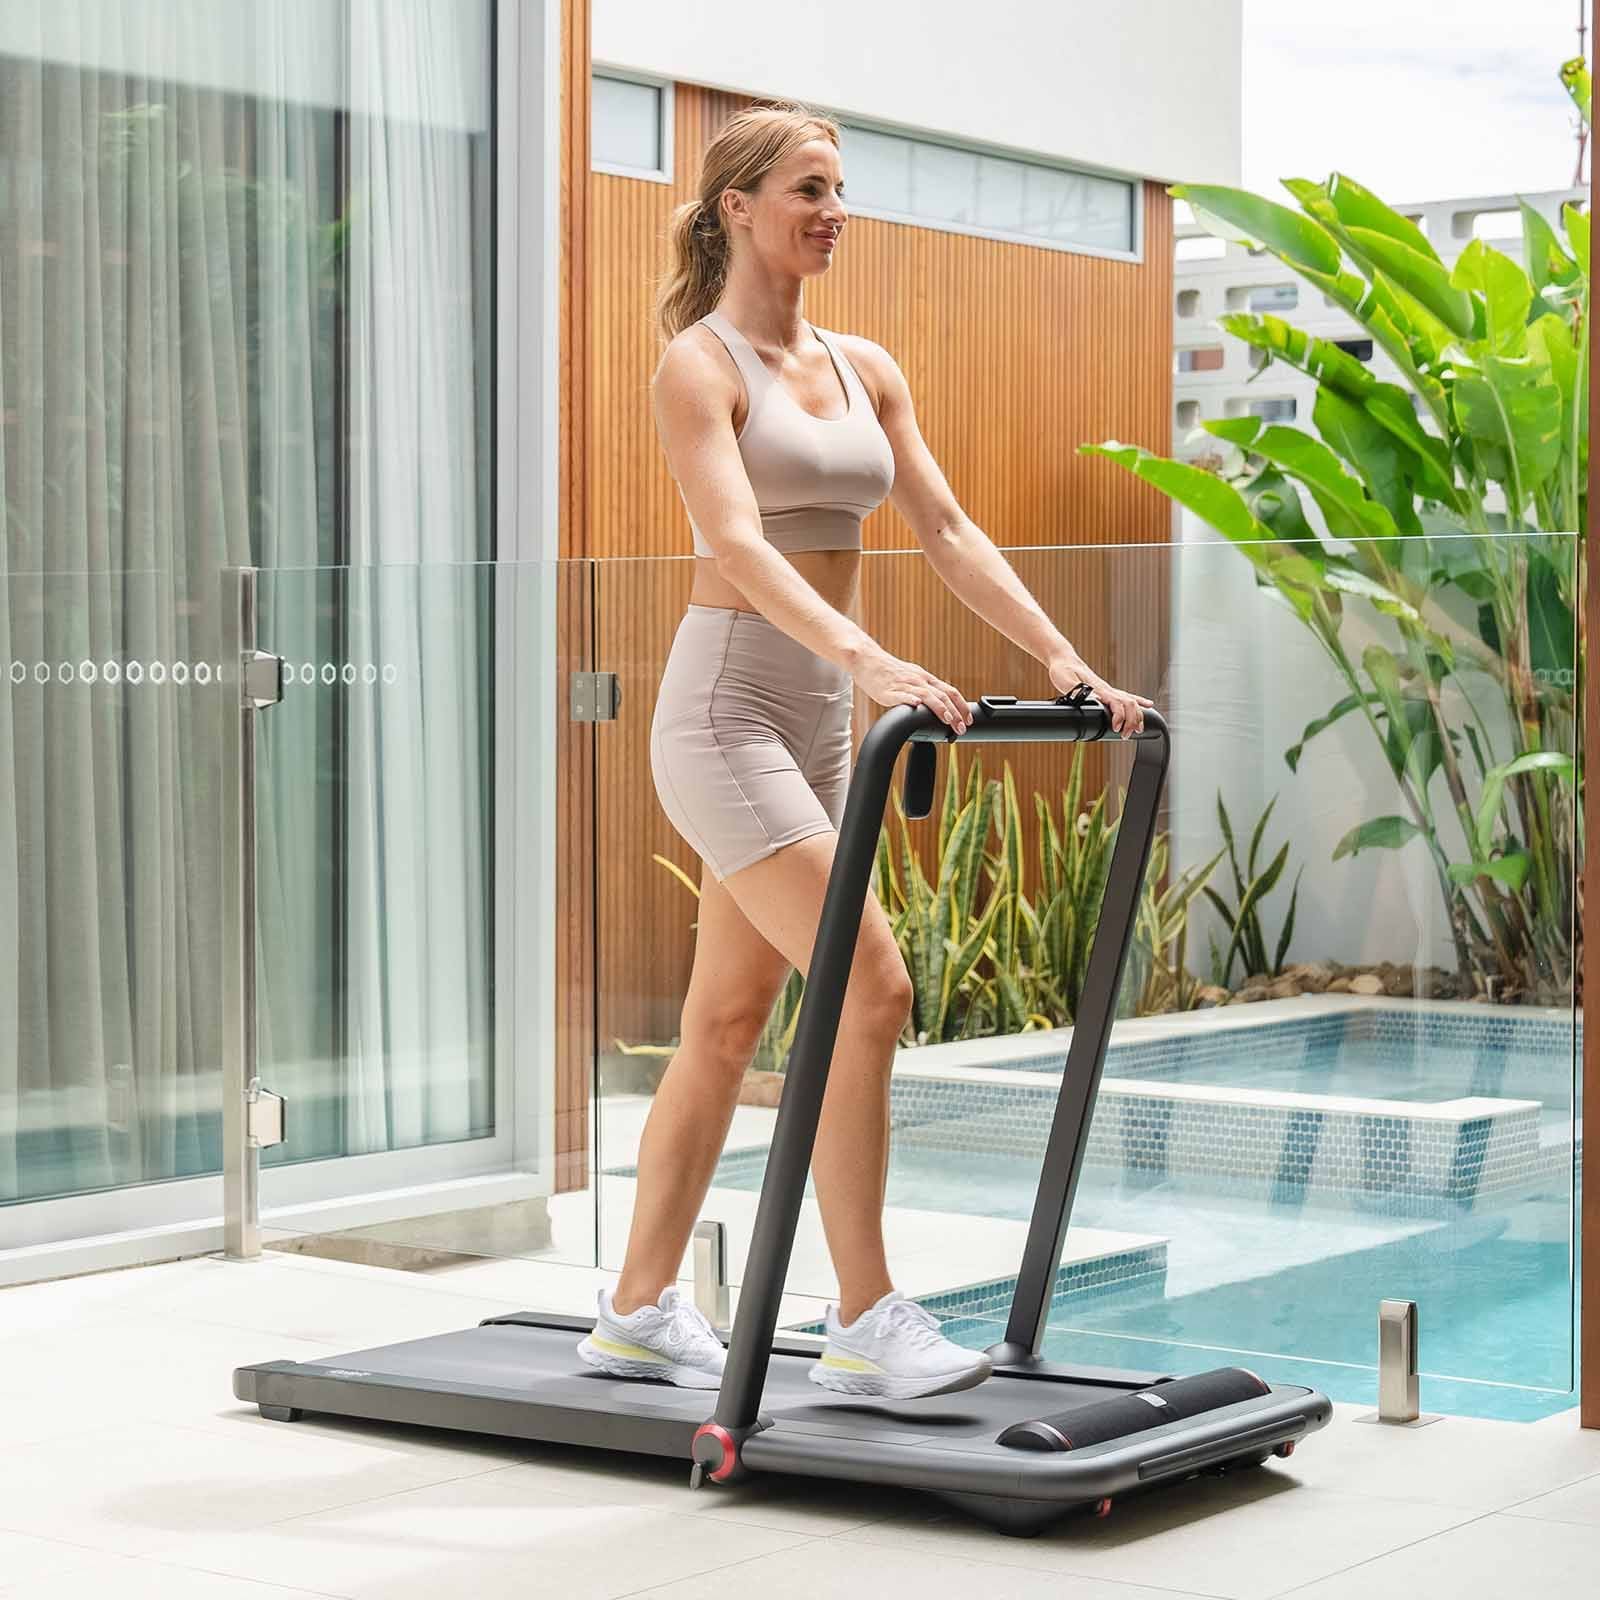 WalkSlim 830 Treadmill - For Walking